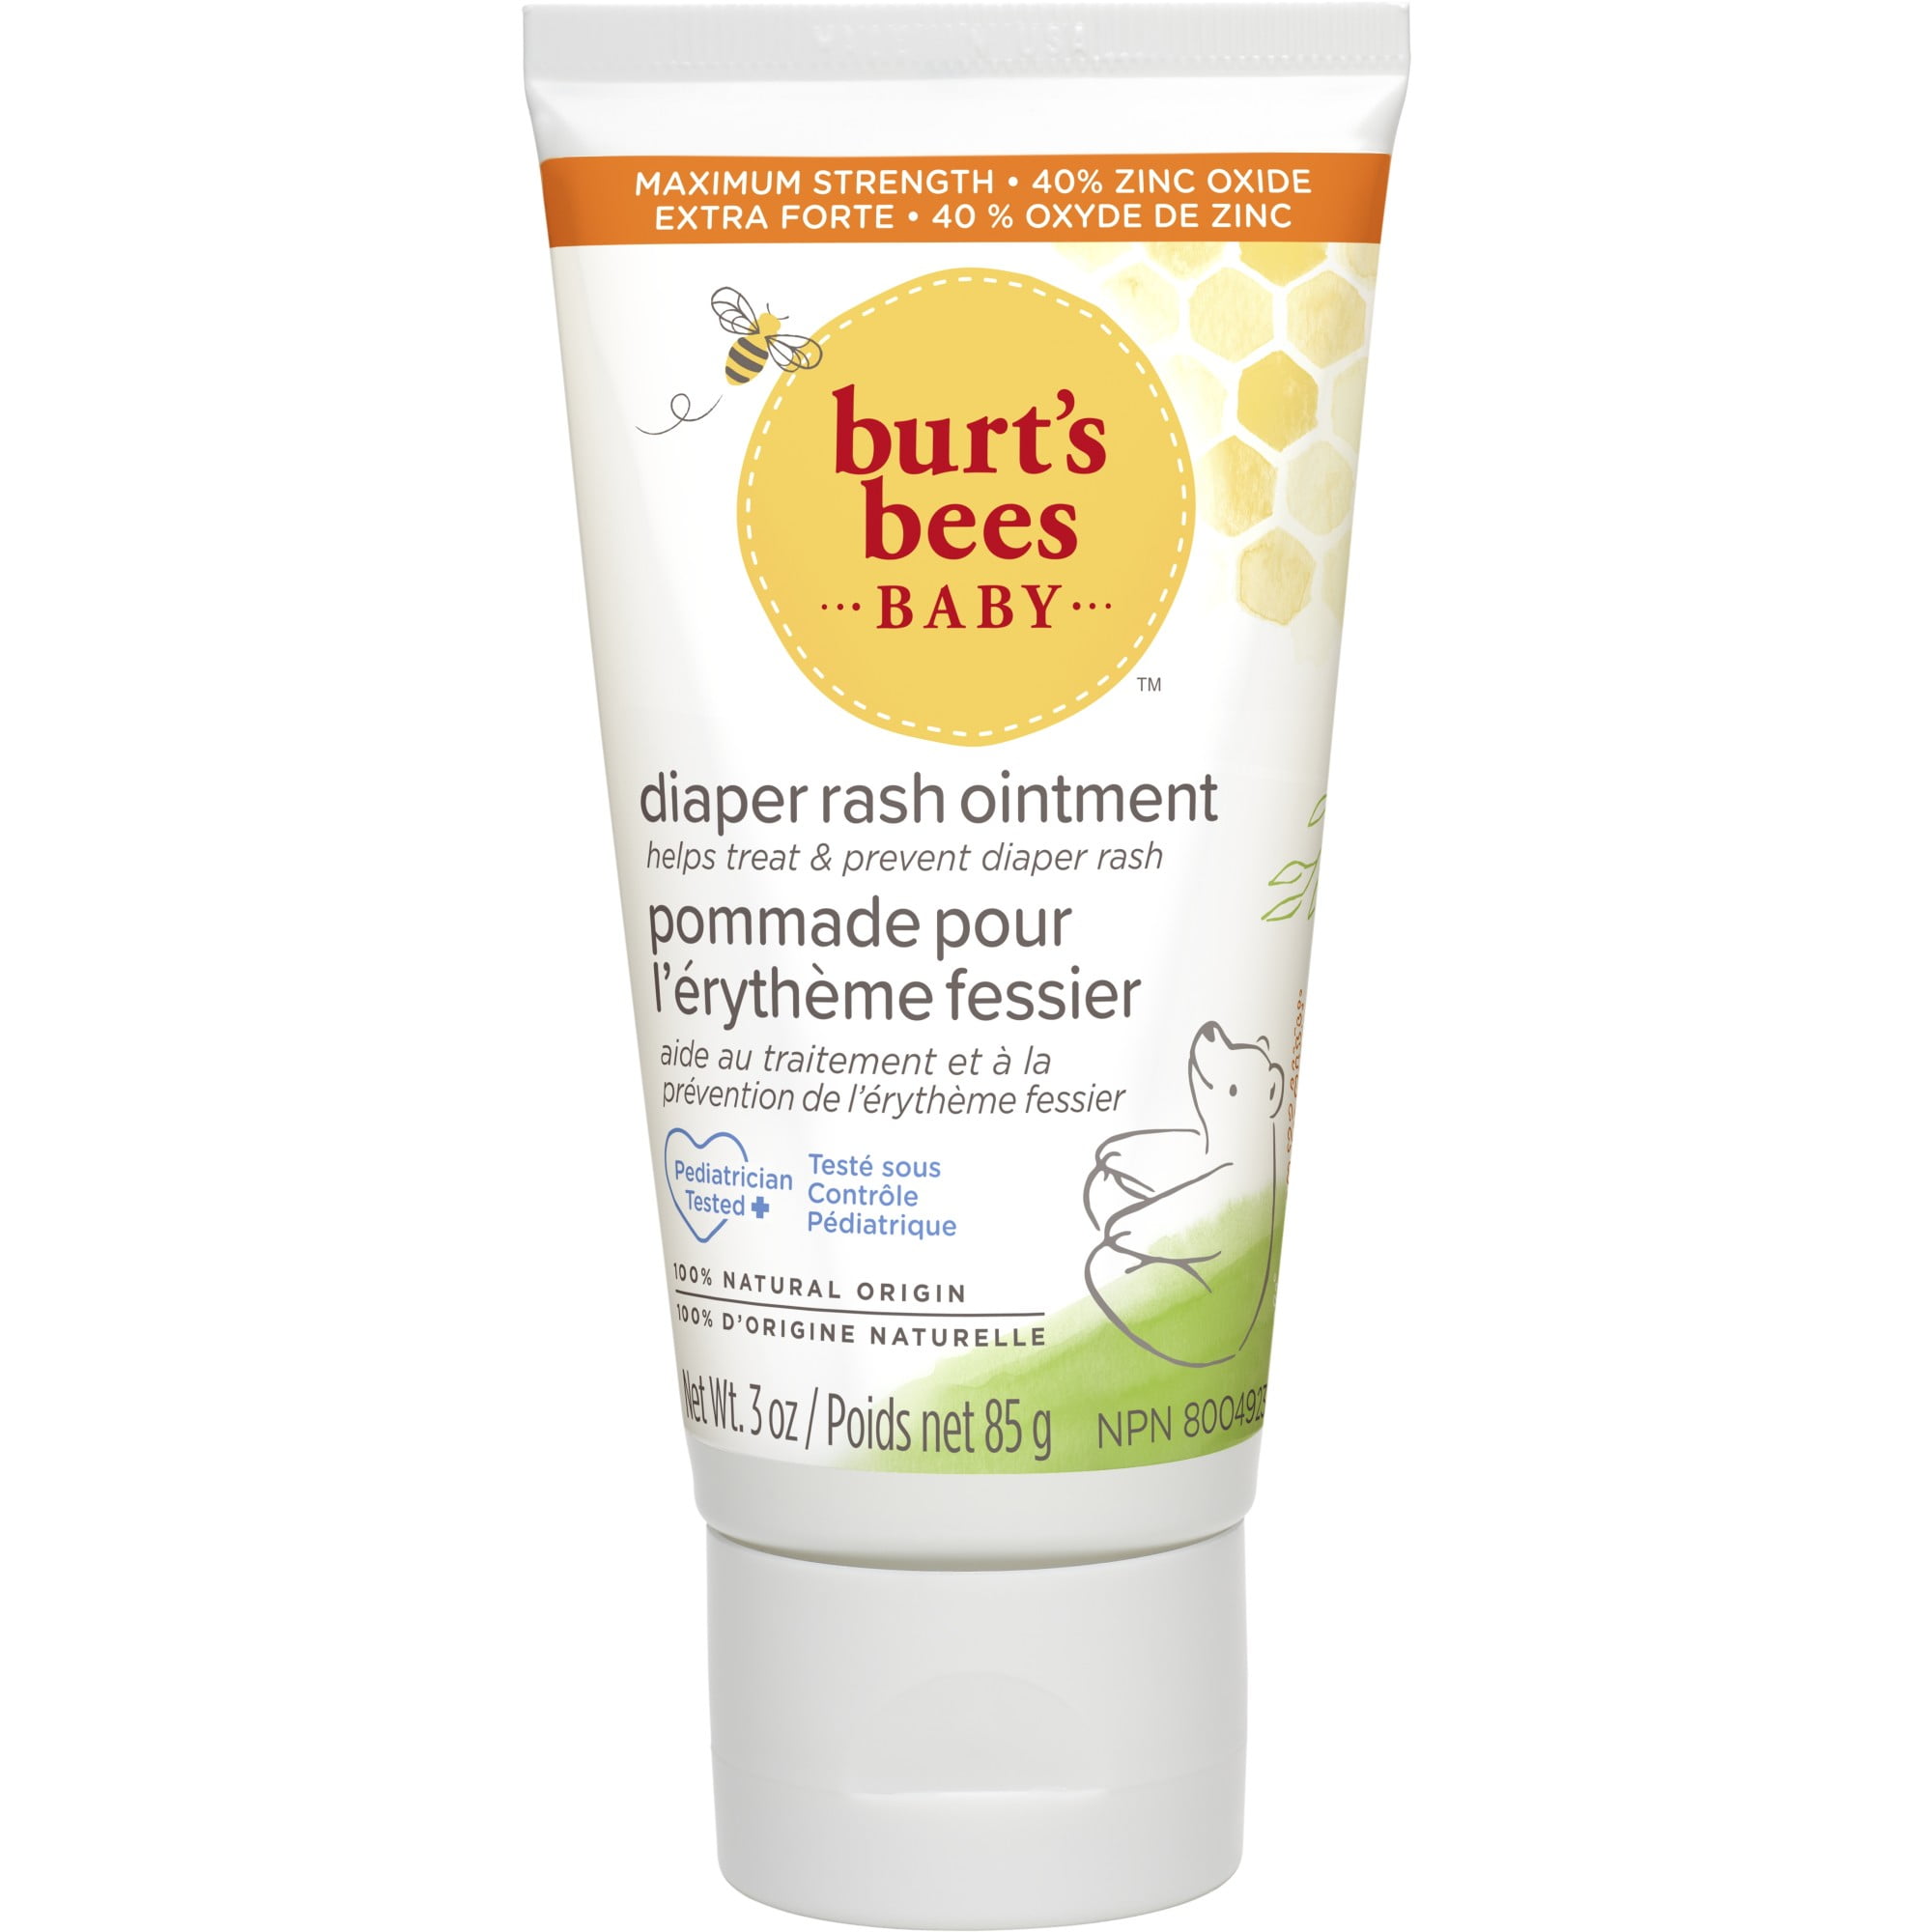 Sneeuwwitje industrie Boekhouder Burt's Bees Baby 100% Natural Origin Diaper Rash Ointment, 3 Ounce Tube -  Walmart.com